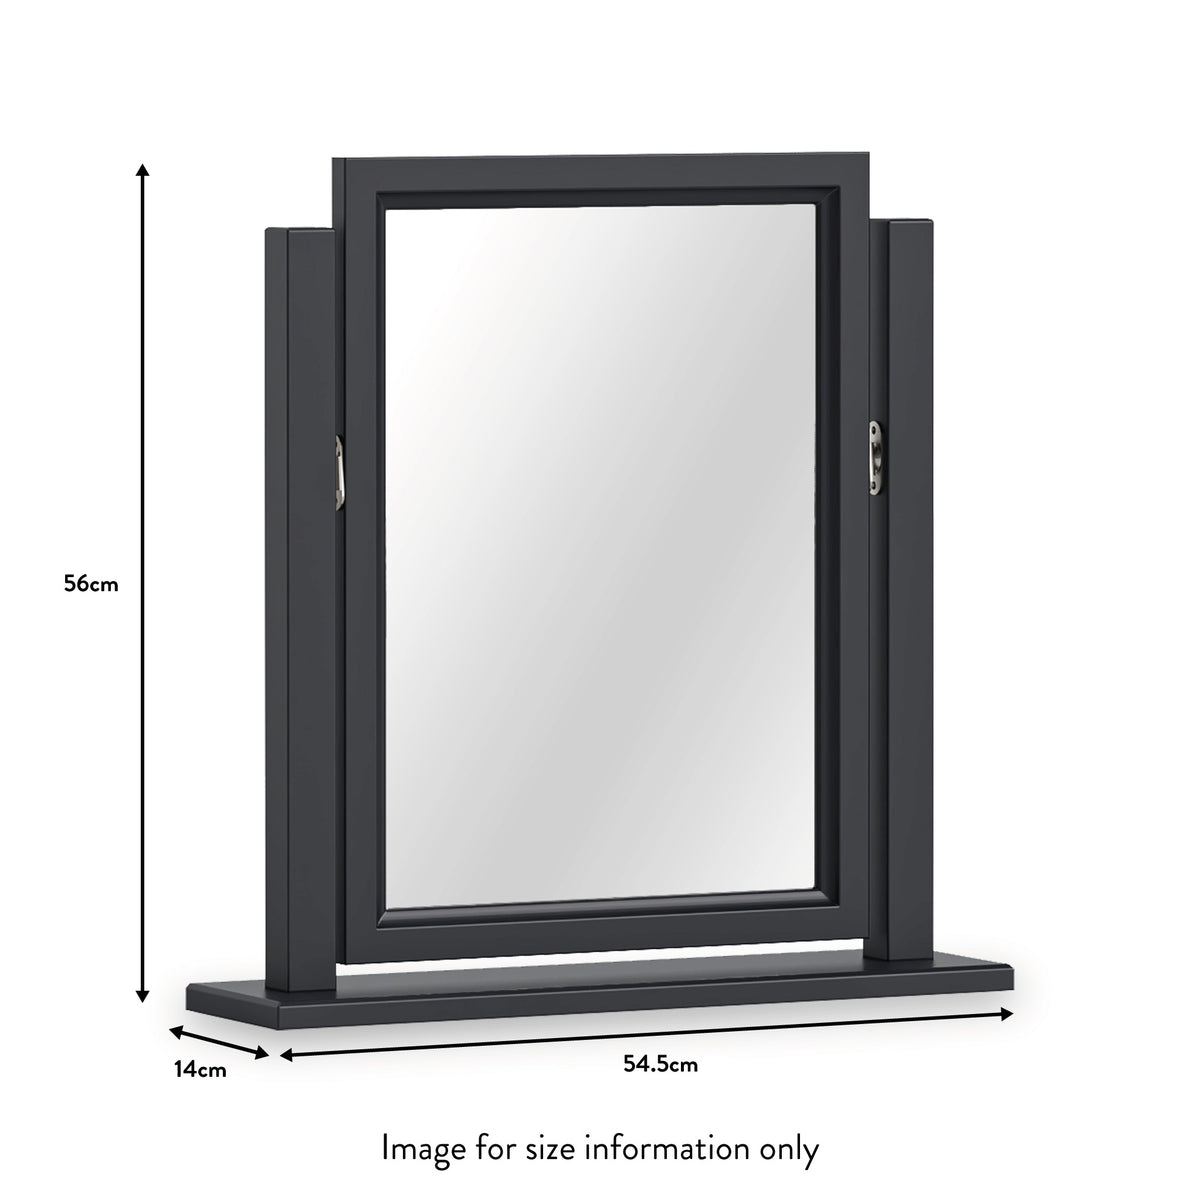 Porter Charcoal Tilting Vanity Mirror dimensions